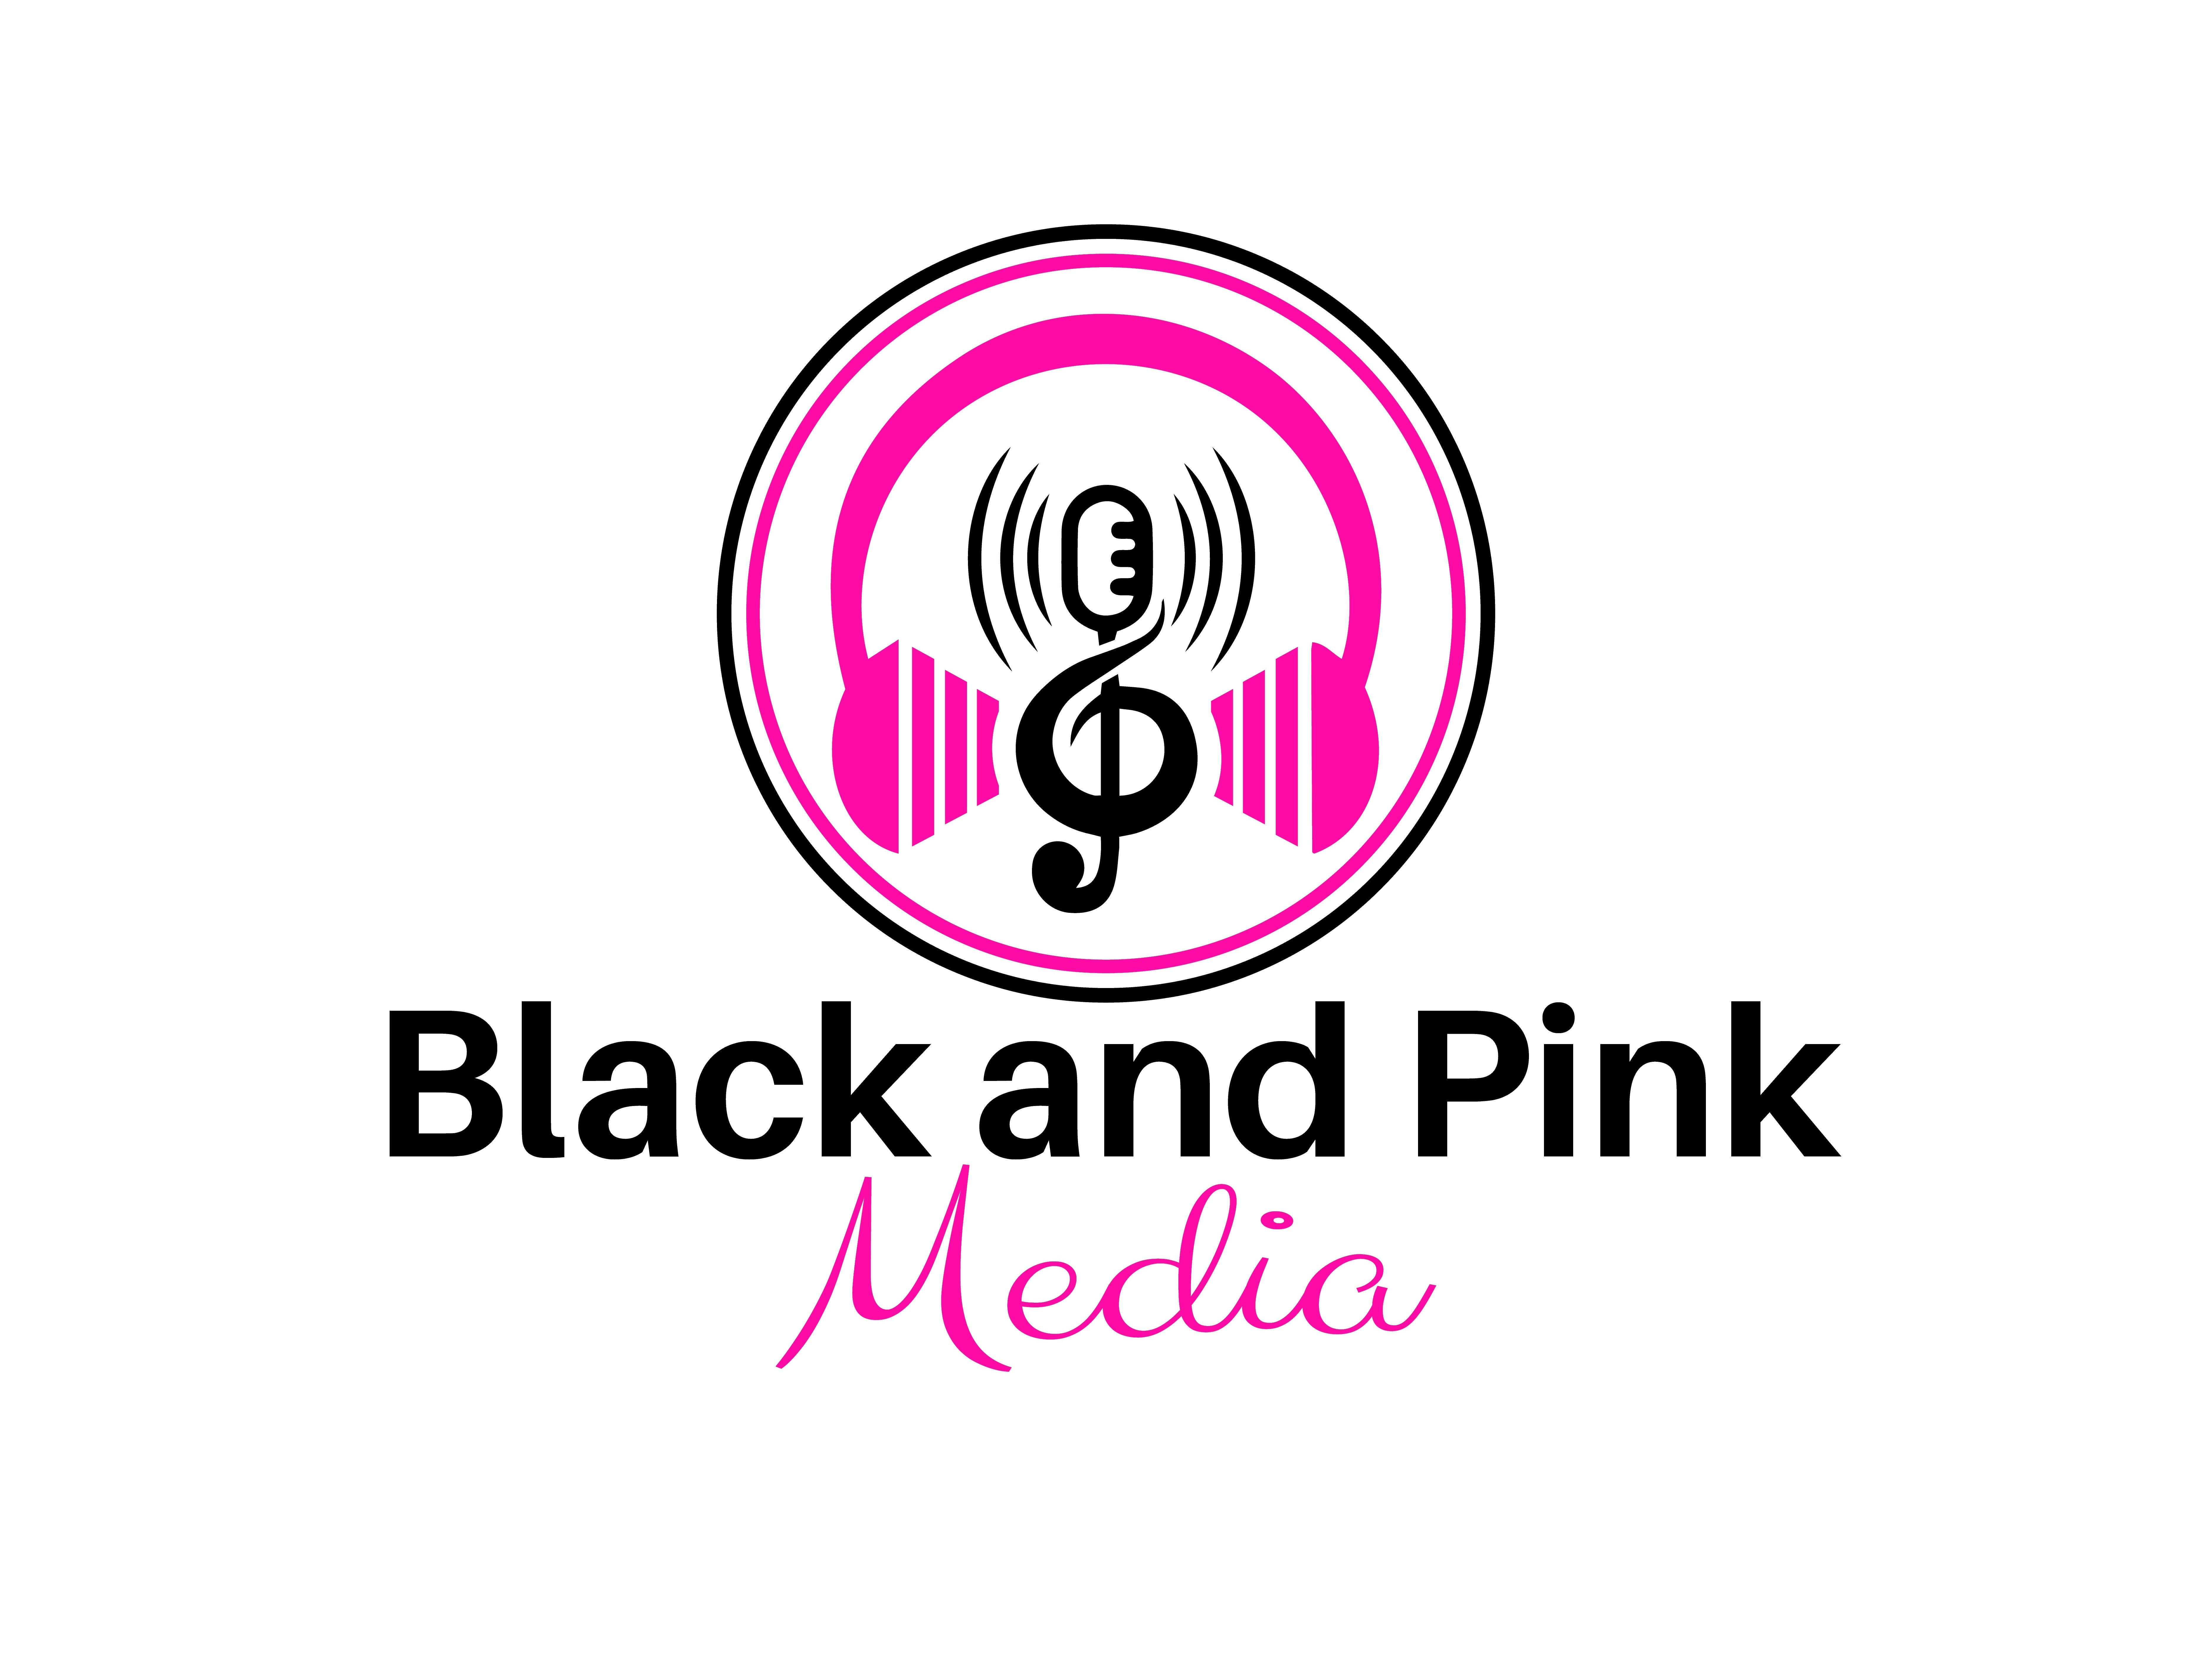 Black and Pink Media